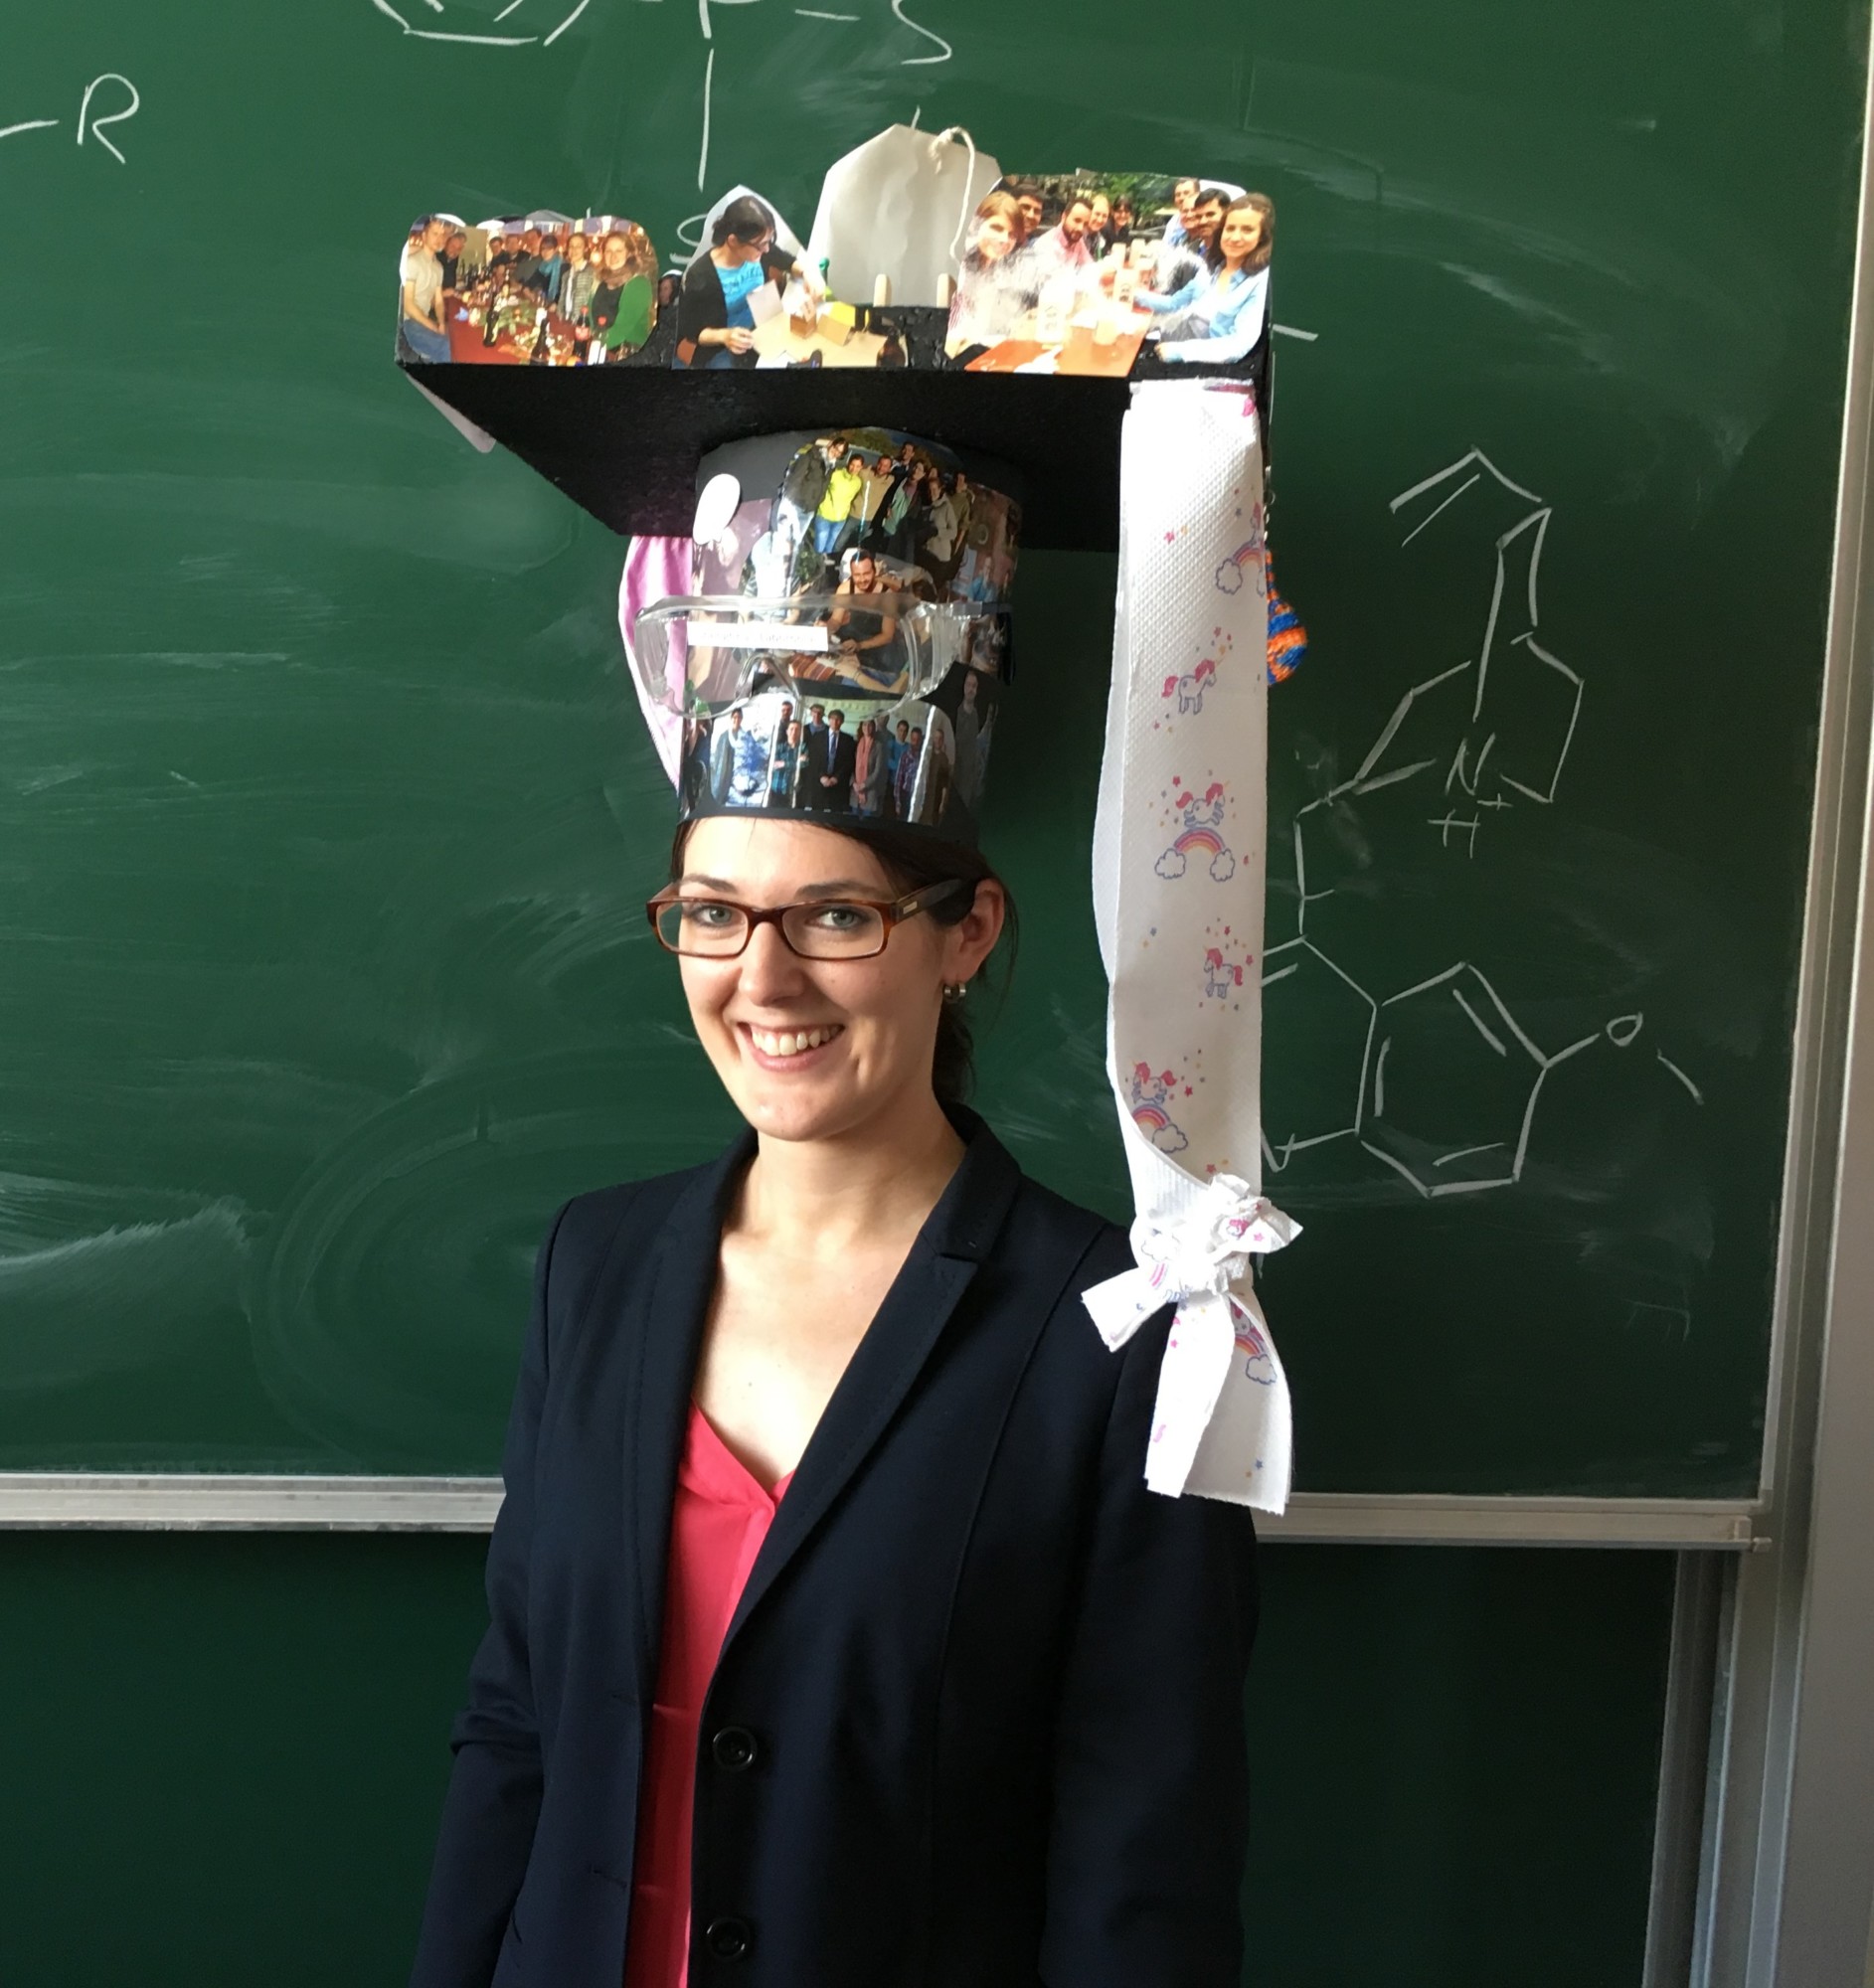 CHRISTINA (29.05.17) successfully passed her PhD Qualifying Exam. Congratulations!!! (Image: Tsogoeva)